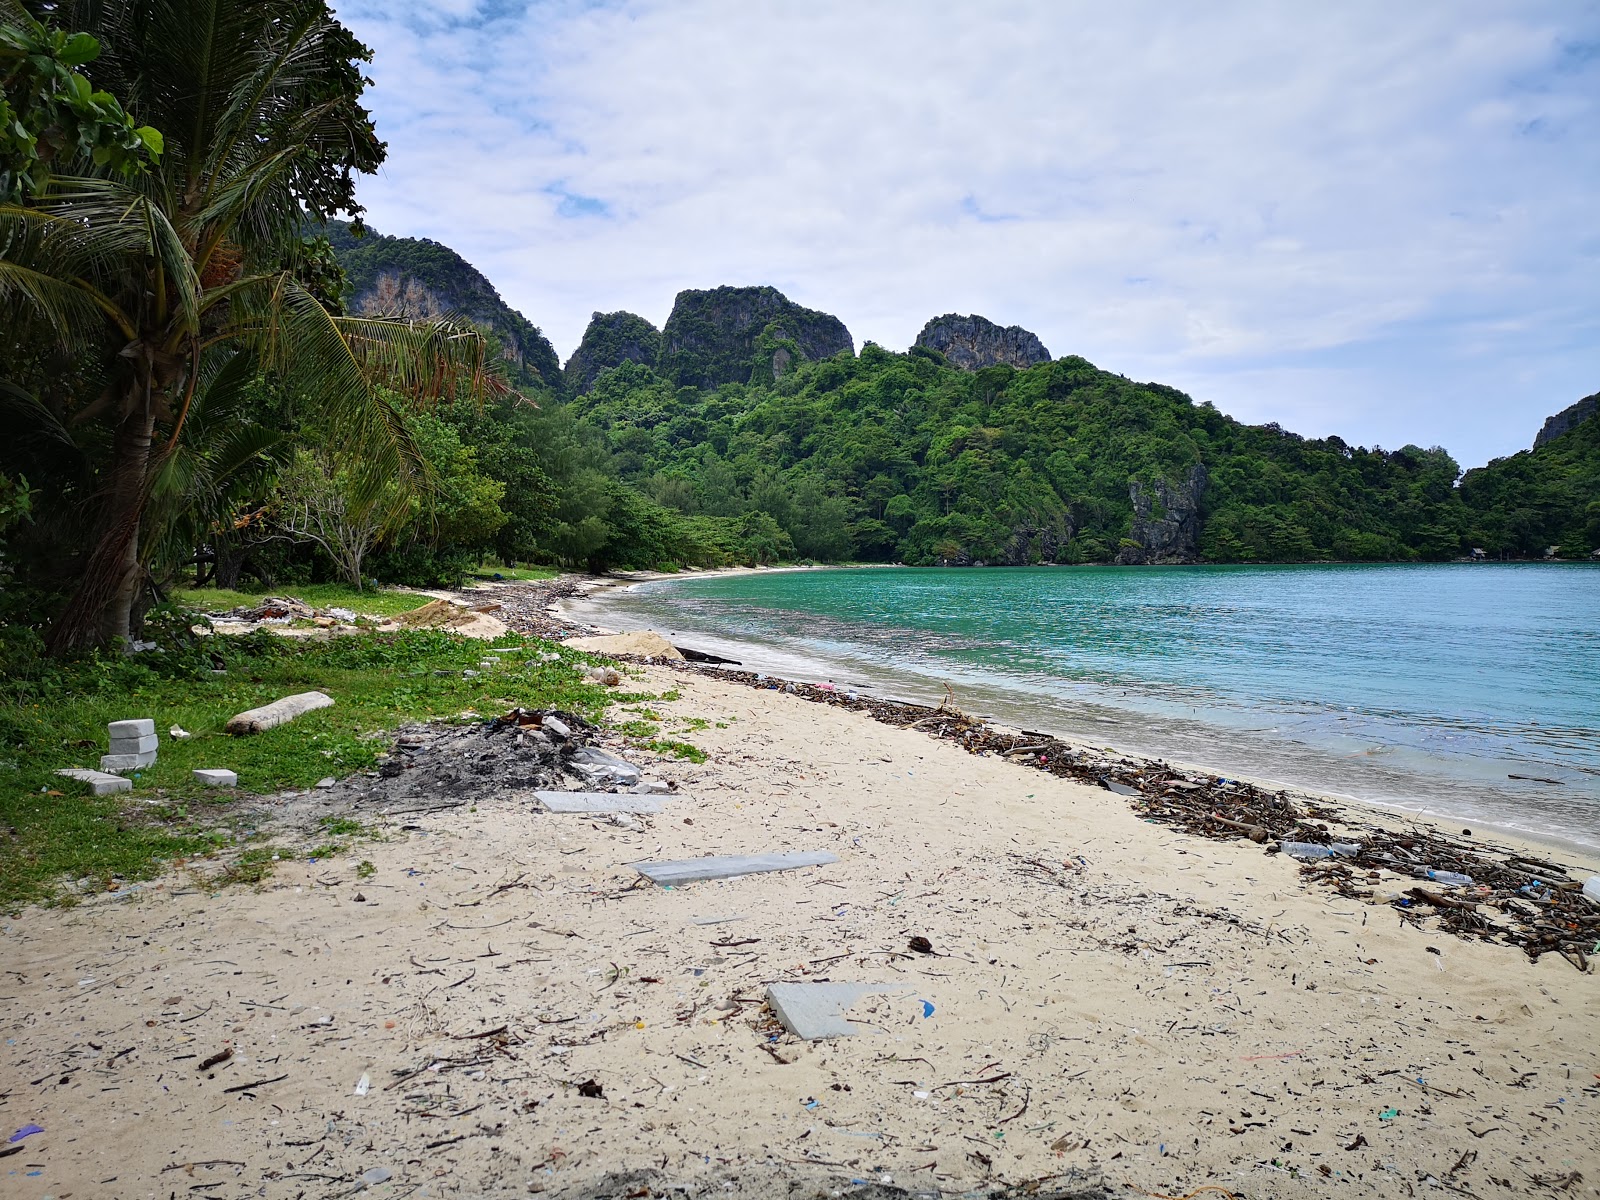 Foto de Loh Lana Bay Beach - lugar popular entre os apreciadores de relaxamento